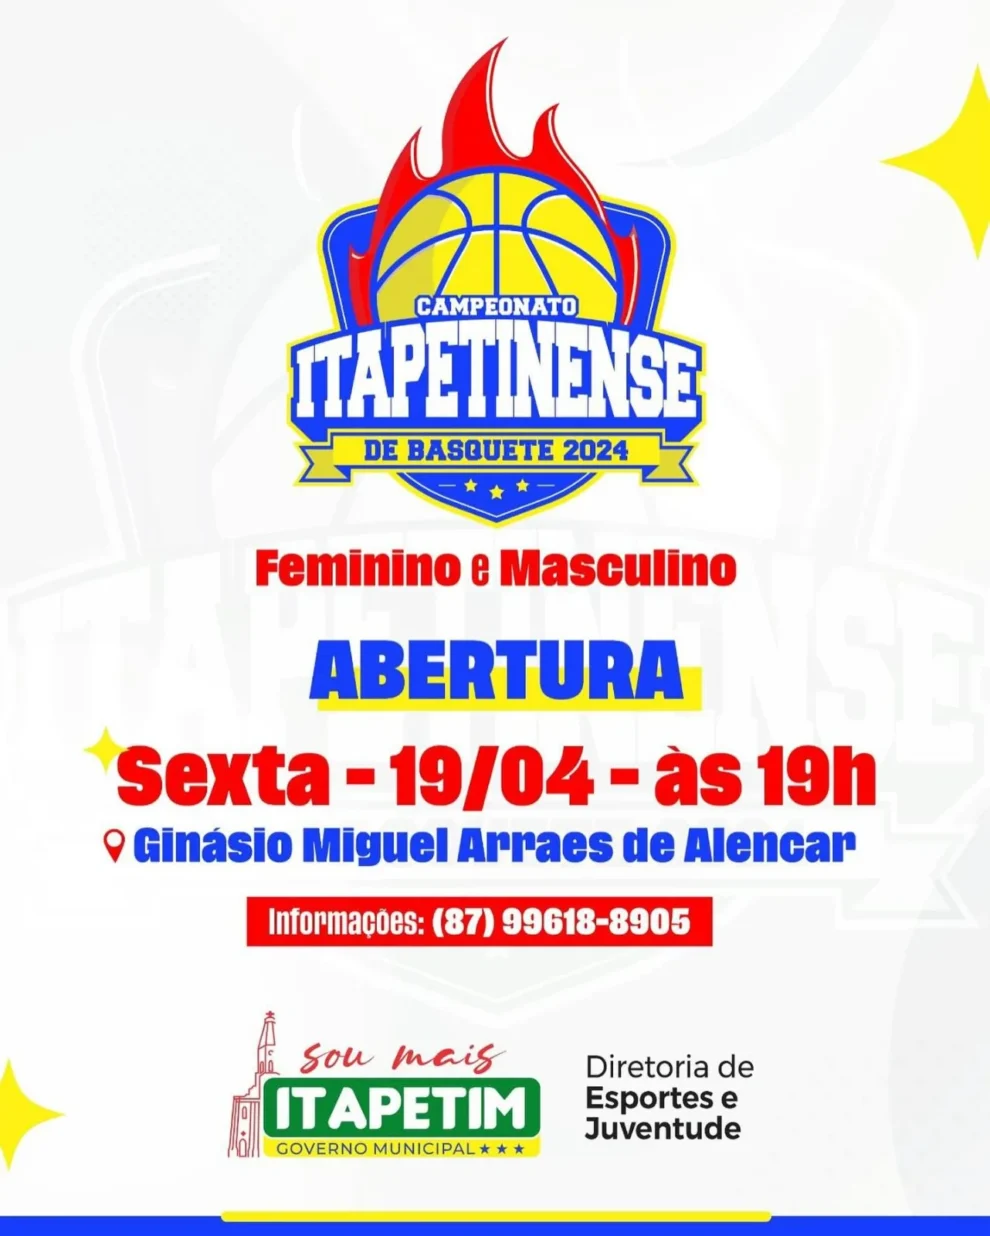 campeonato-de-basquete-agita-itapetim-neste-final-de-semana